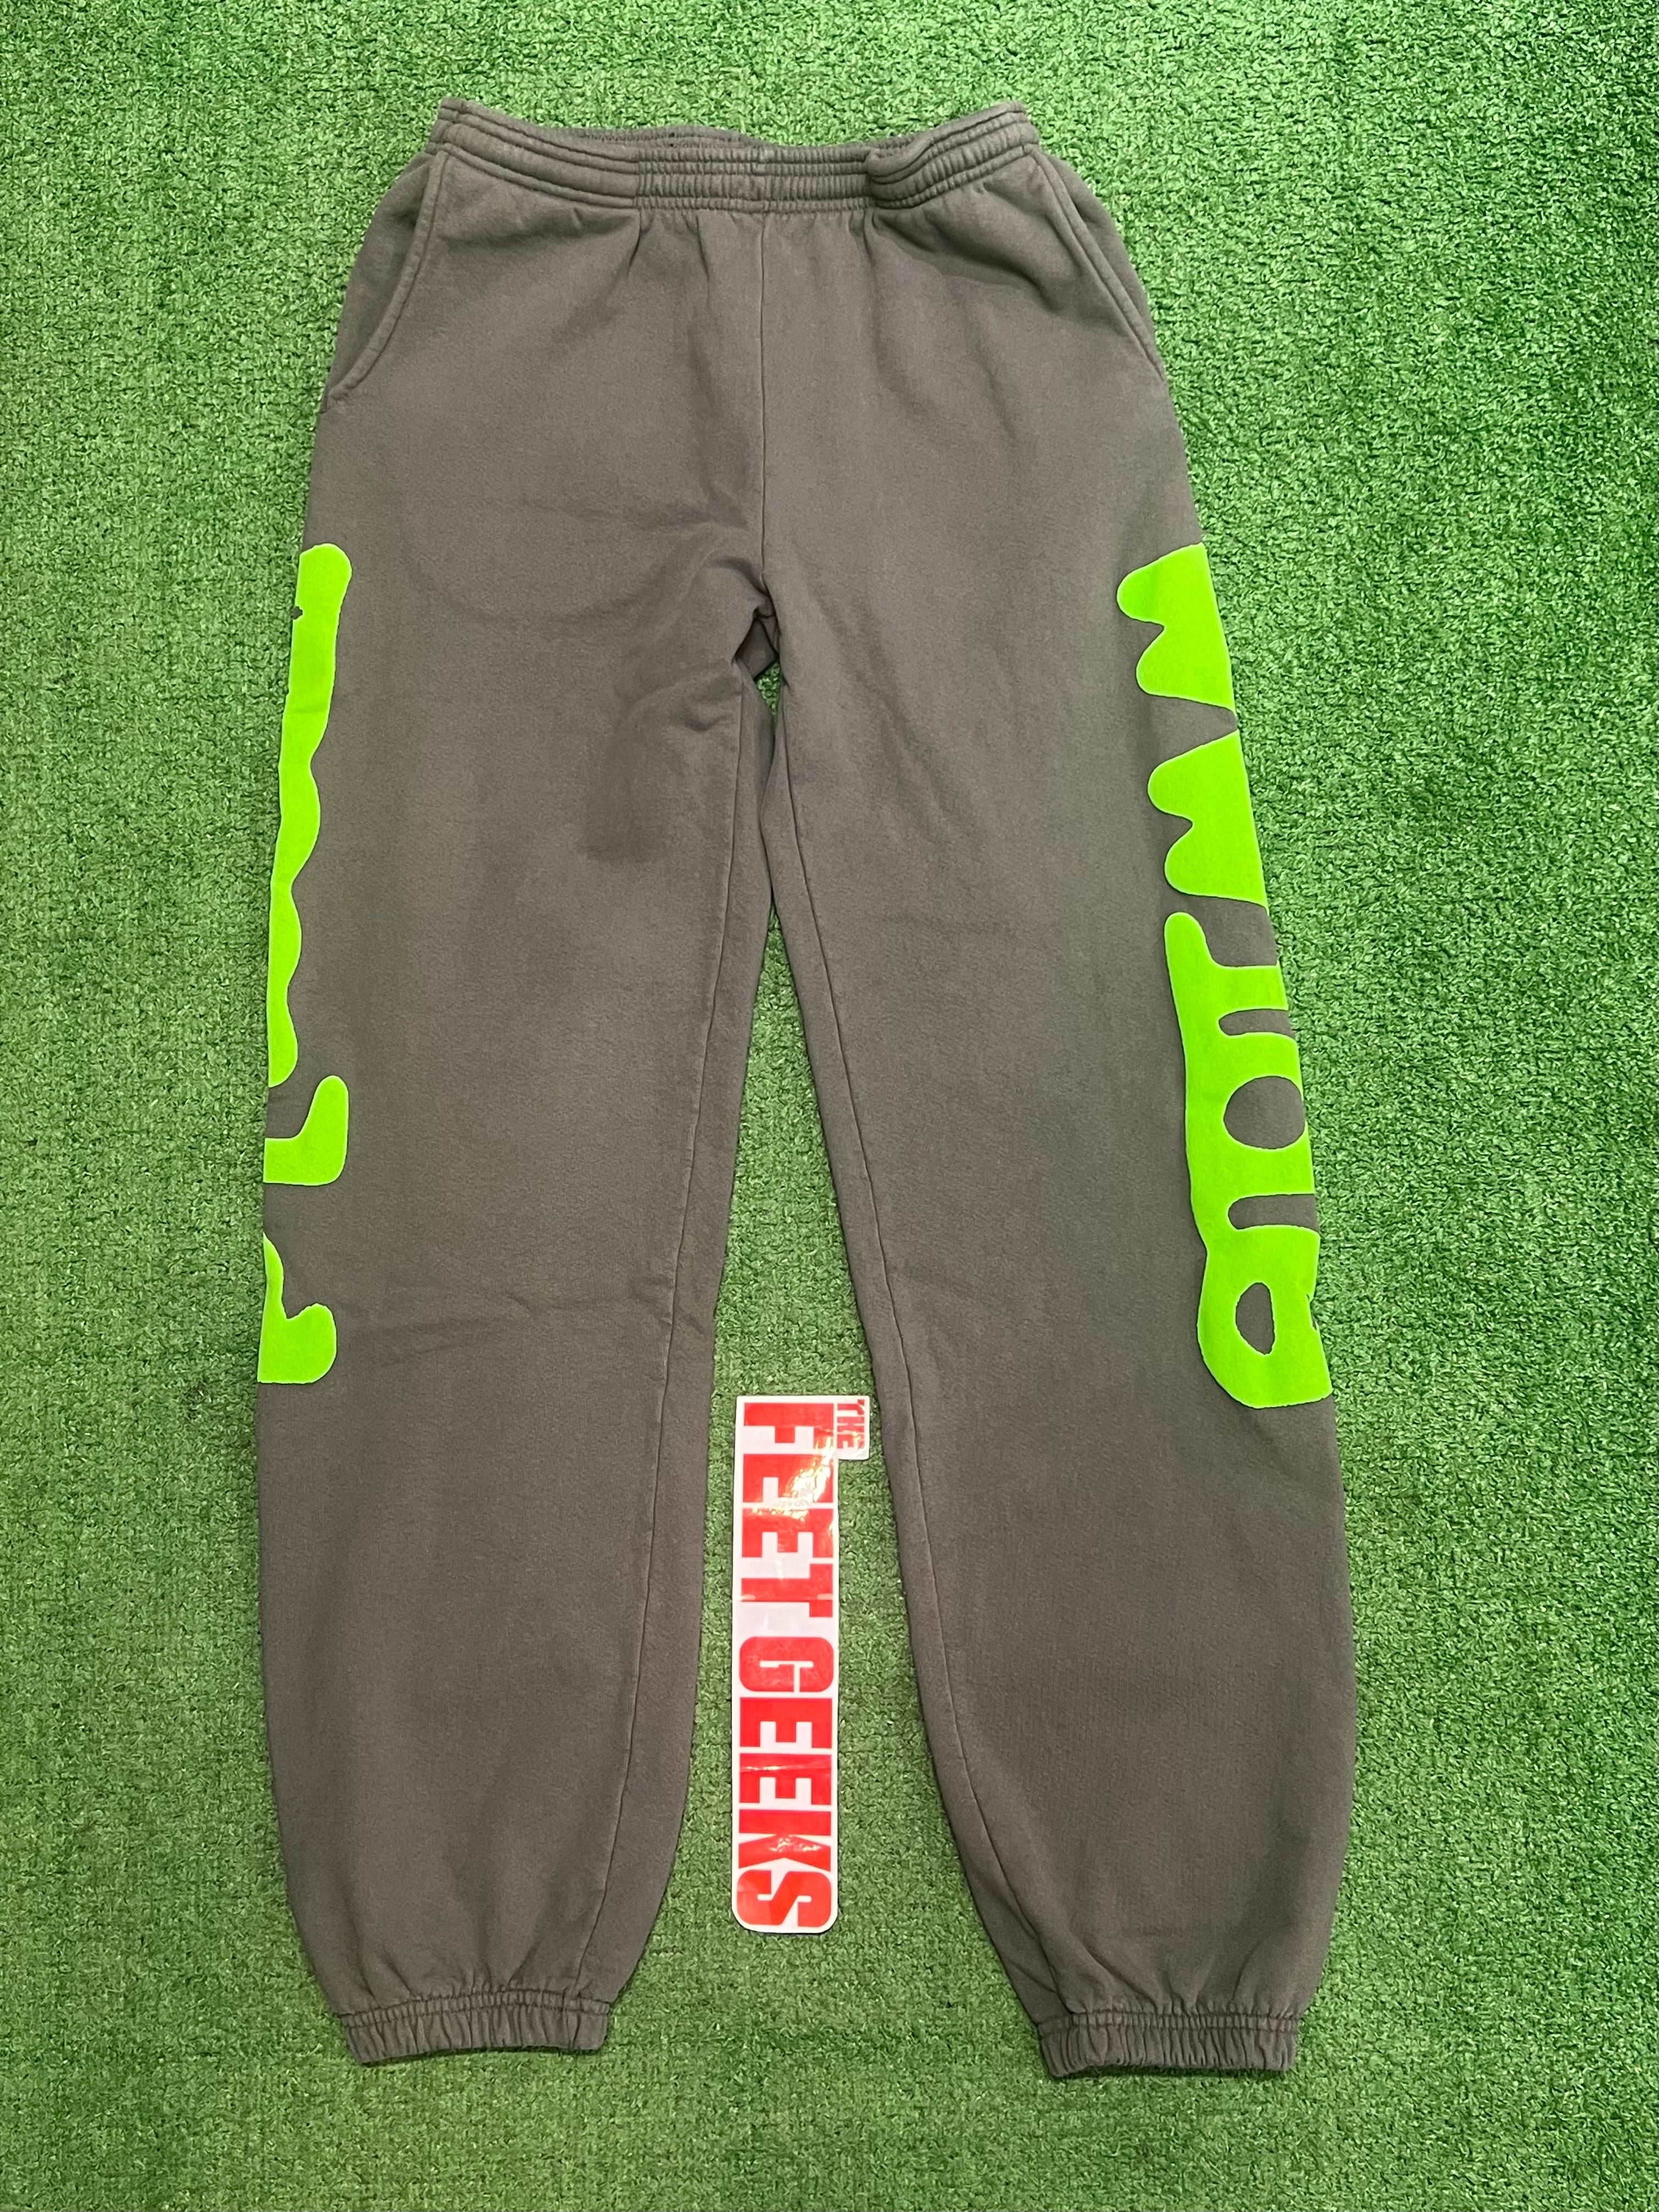 Men’s Spyder Sweatpants Grey/Green Brand New